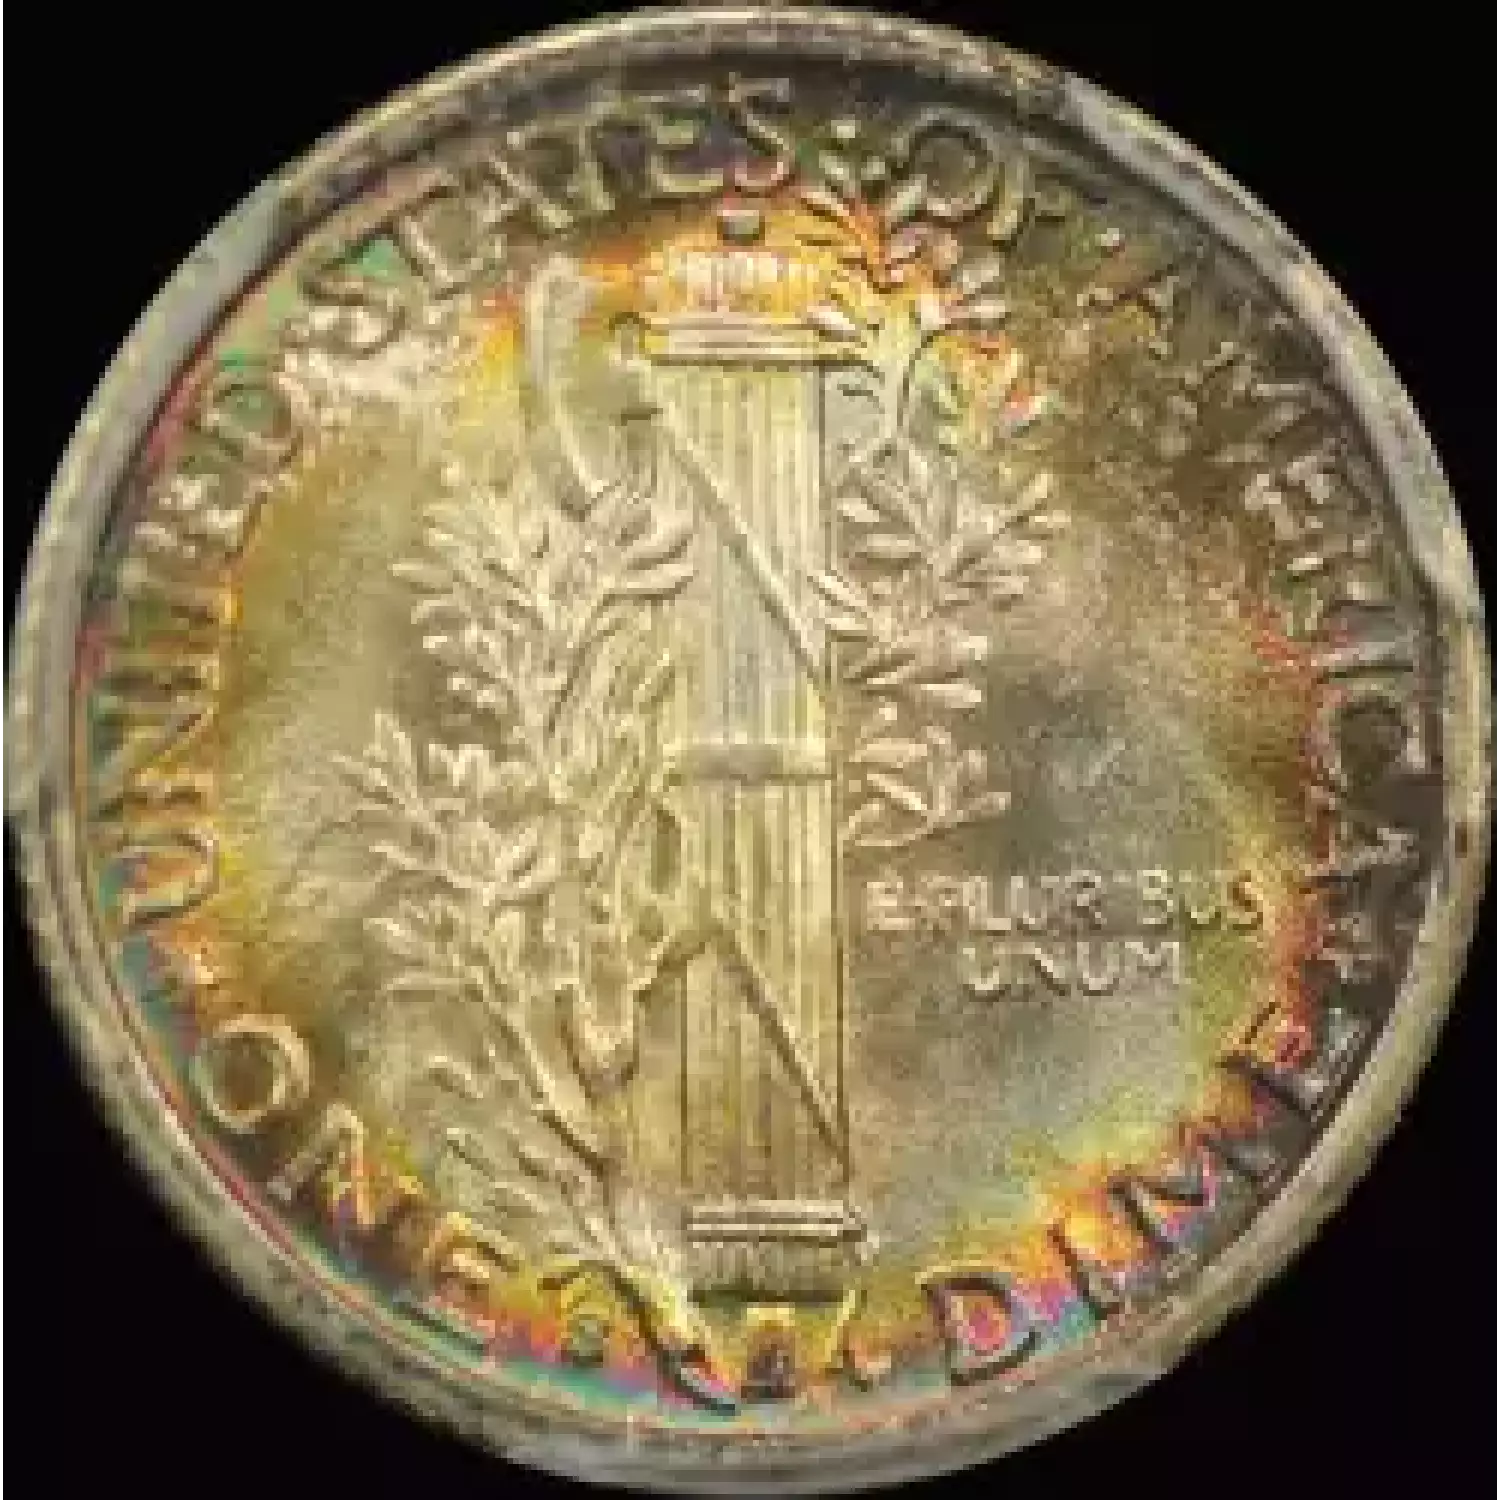 Dimes---Winged Liberty Head or Mercury 1916-1945 -Silver- 1 Dime (2)